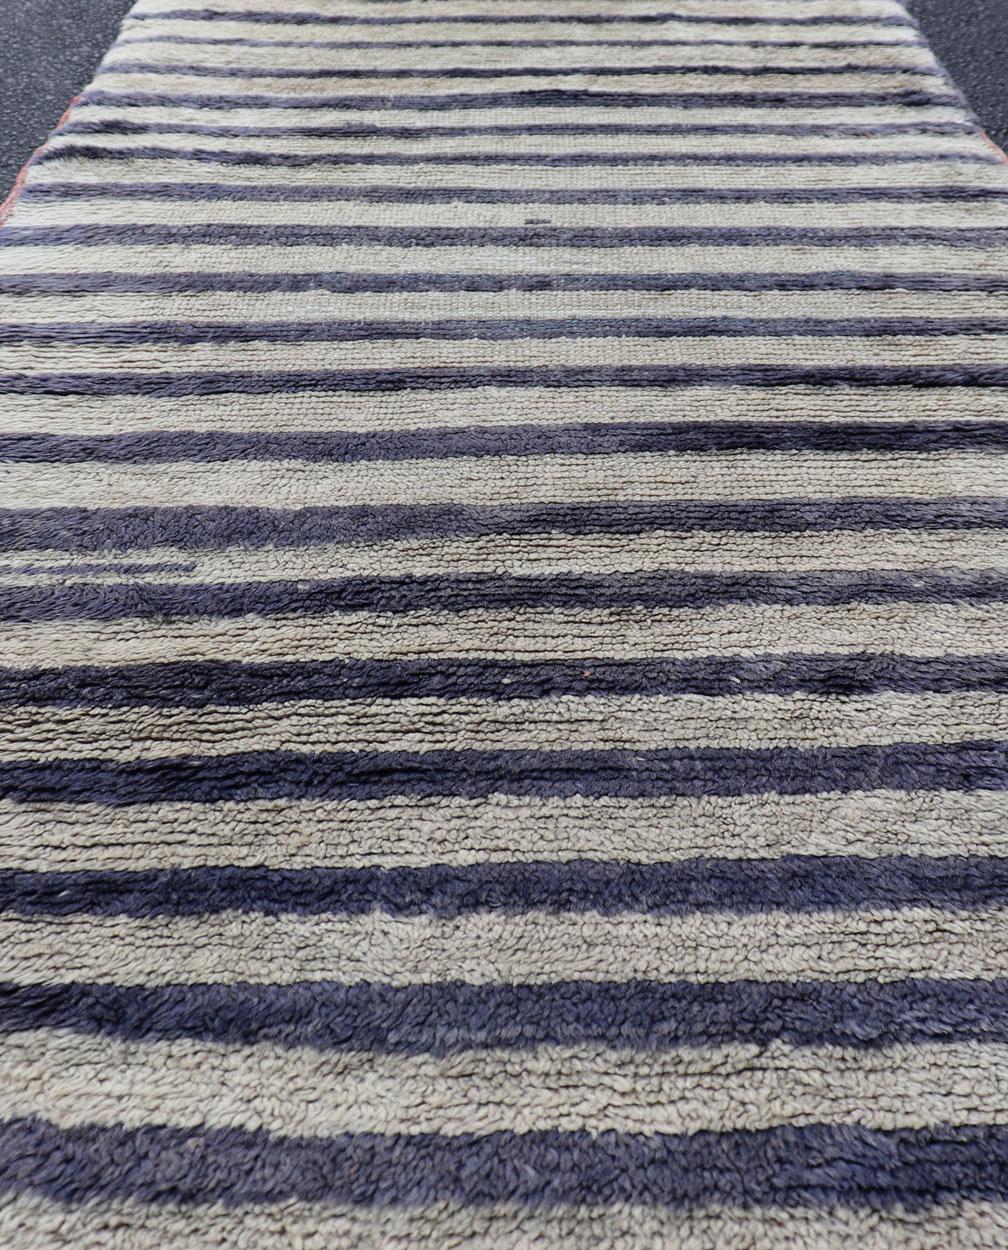 Turkish Angora Vintage Tulu Carpet with Stripe Pattern Light Taupe & Navy Blue For Sale 4